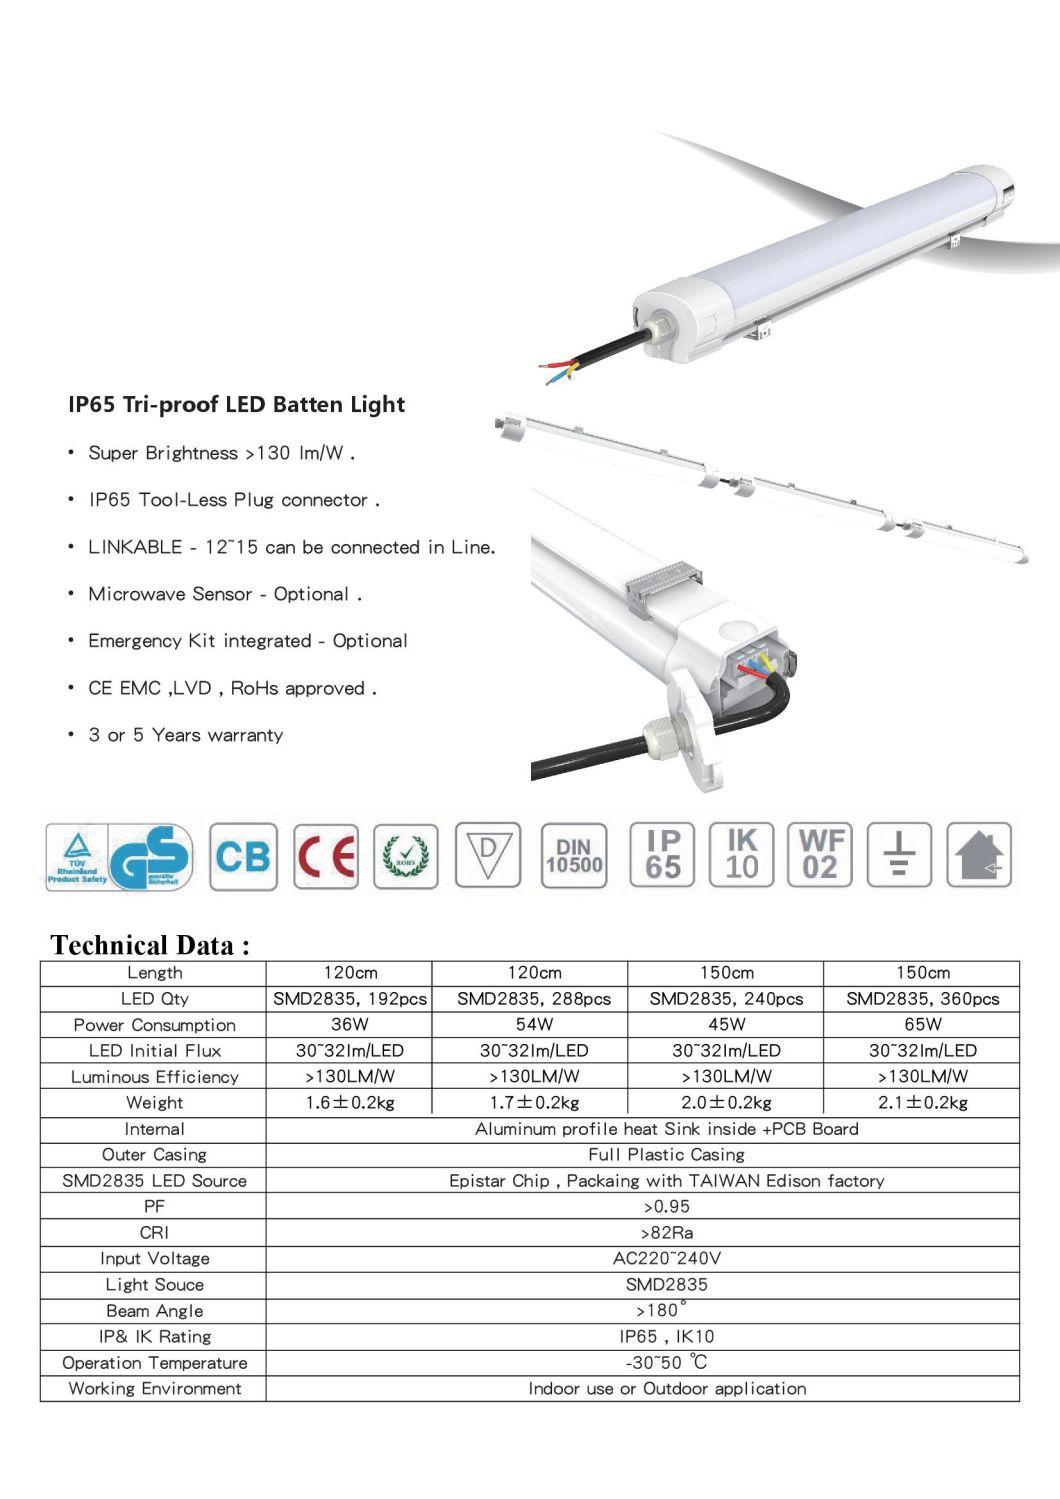 IP65 Lampara Prueba De Vapor Ajustado LED 40W 1.2m Impermeable